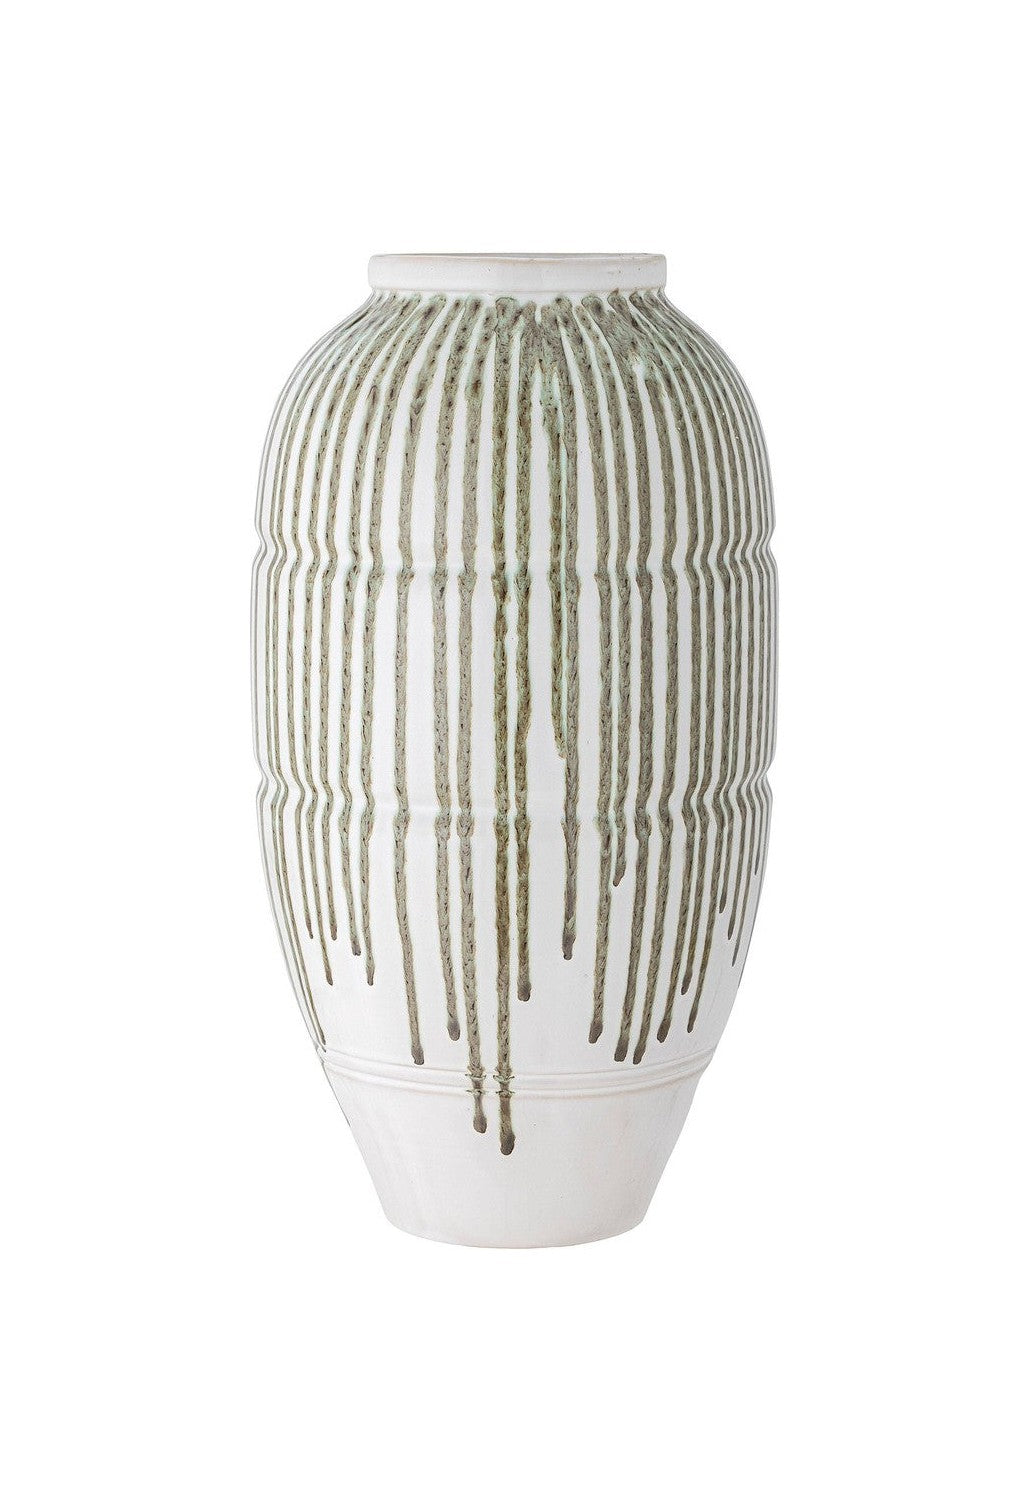 Creative Collection Scarlet Vase, Green, Stoneware